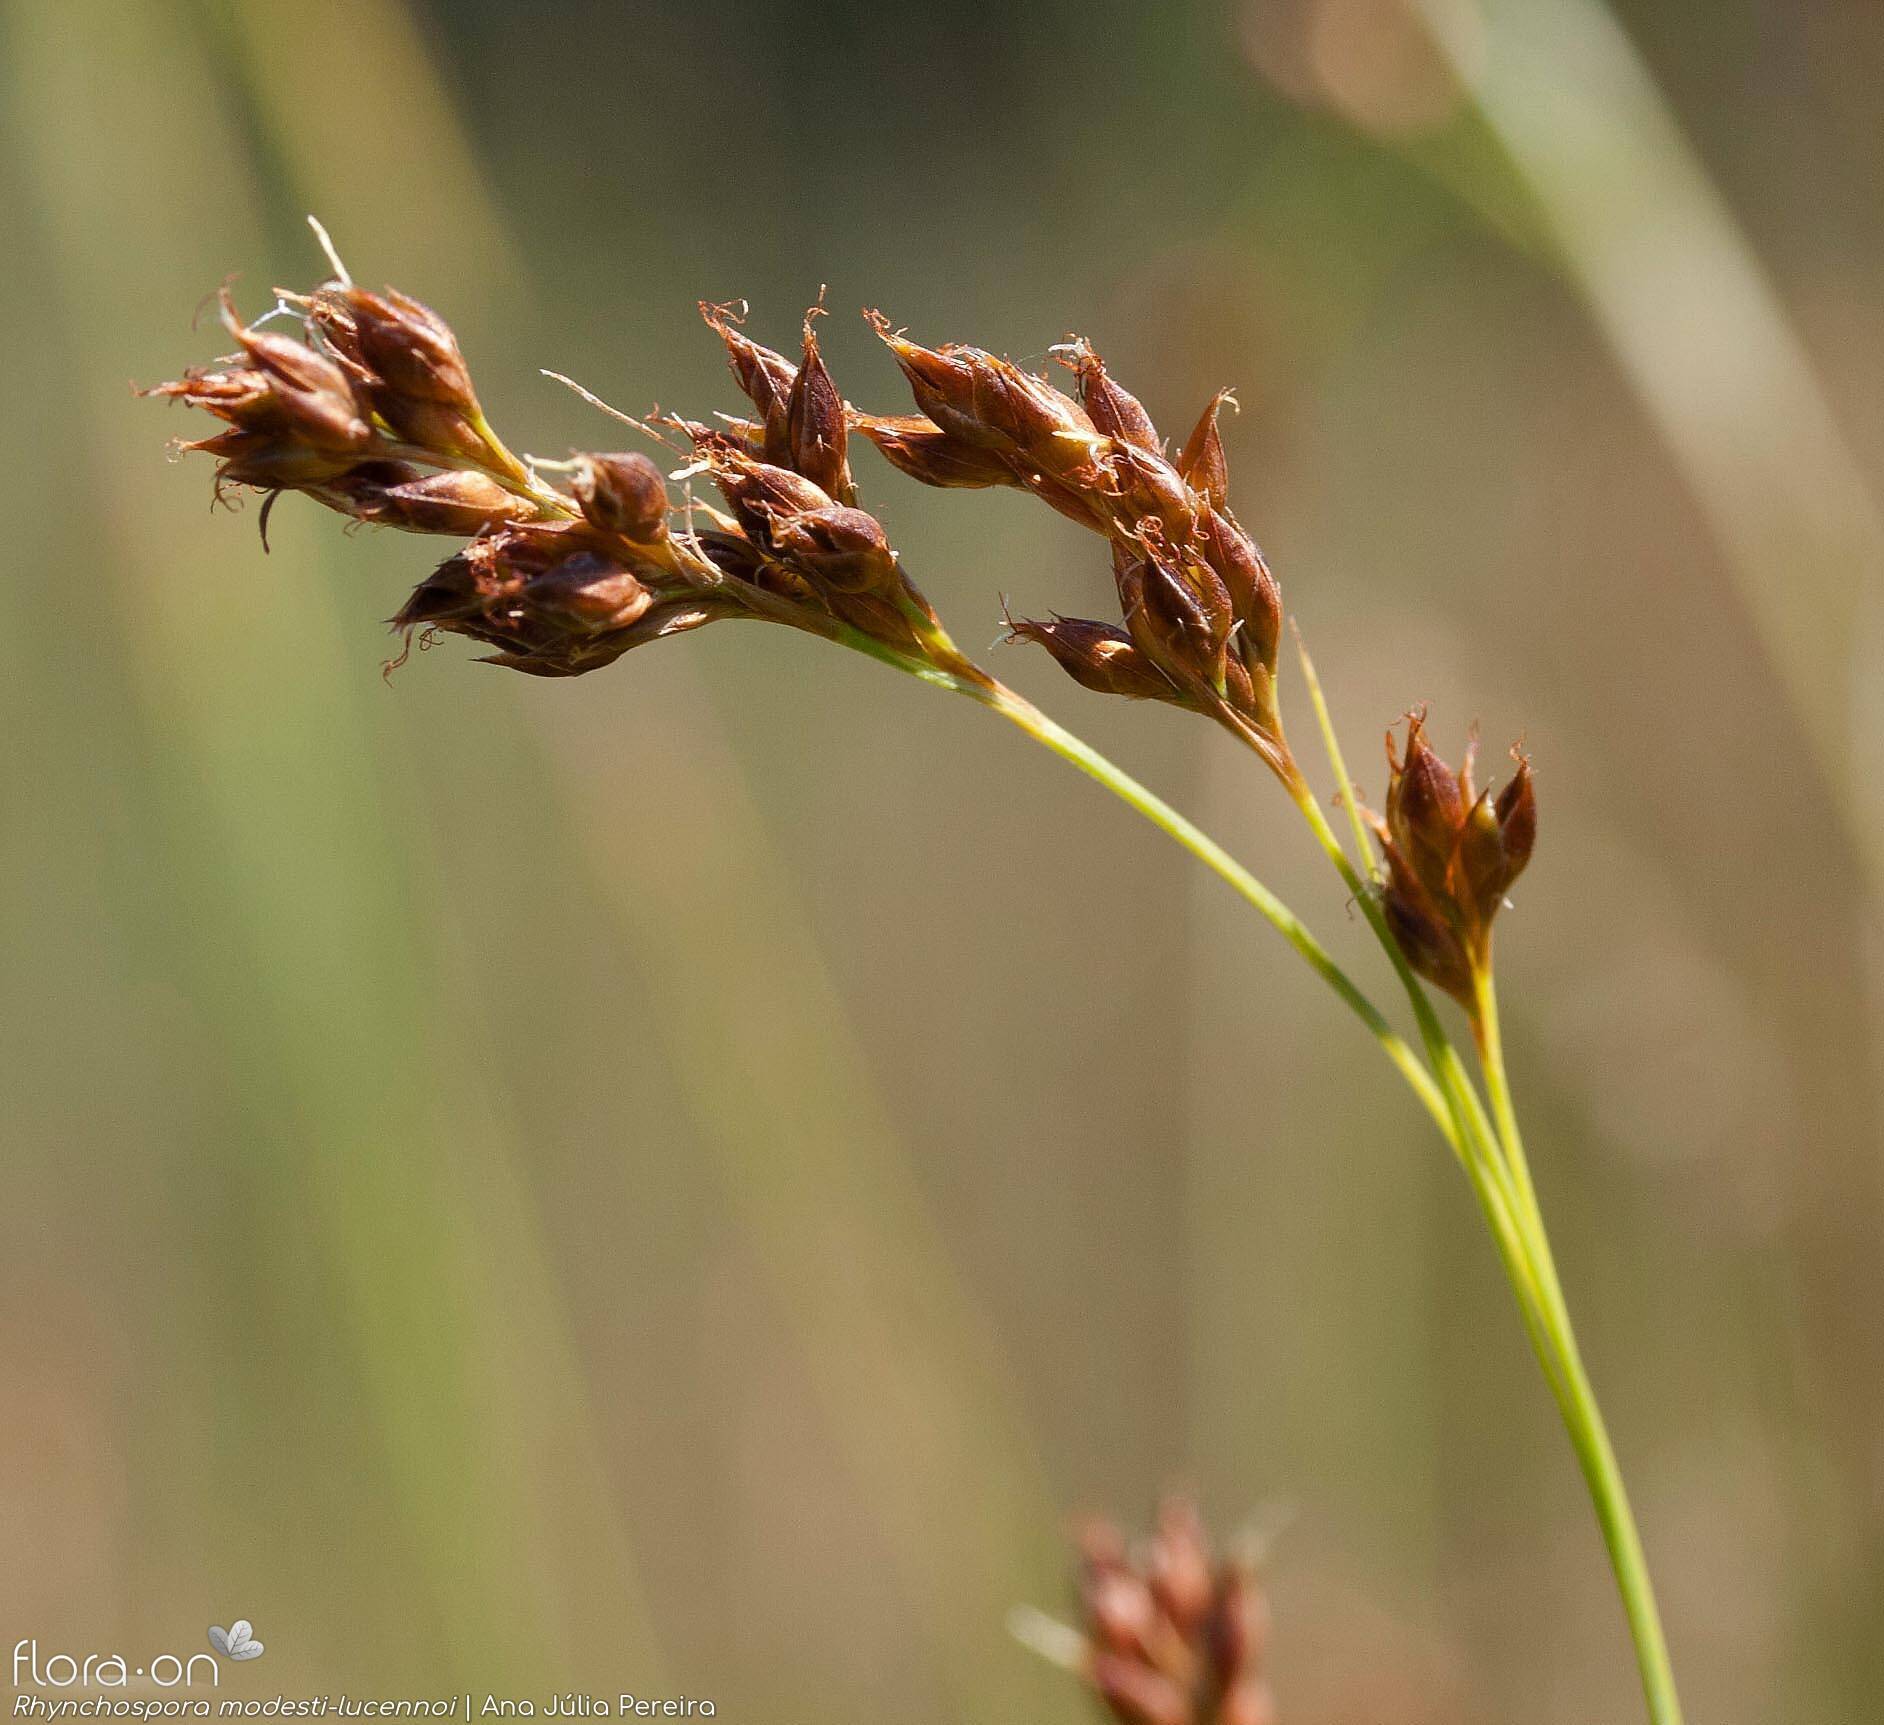 Rhynchospora modesti-lucennoi - Flor (close-up) | Ana Júlia Pereira; CC BY-NC 4.0